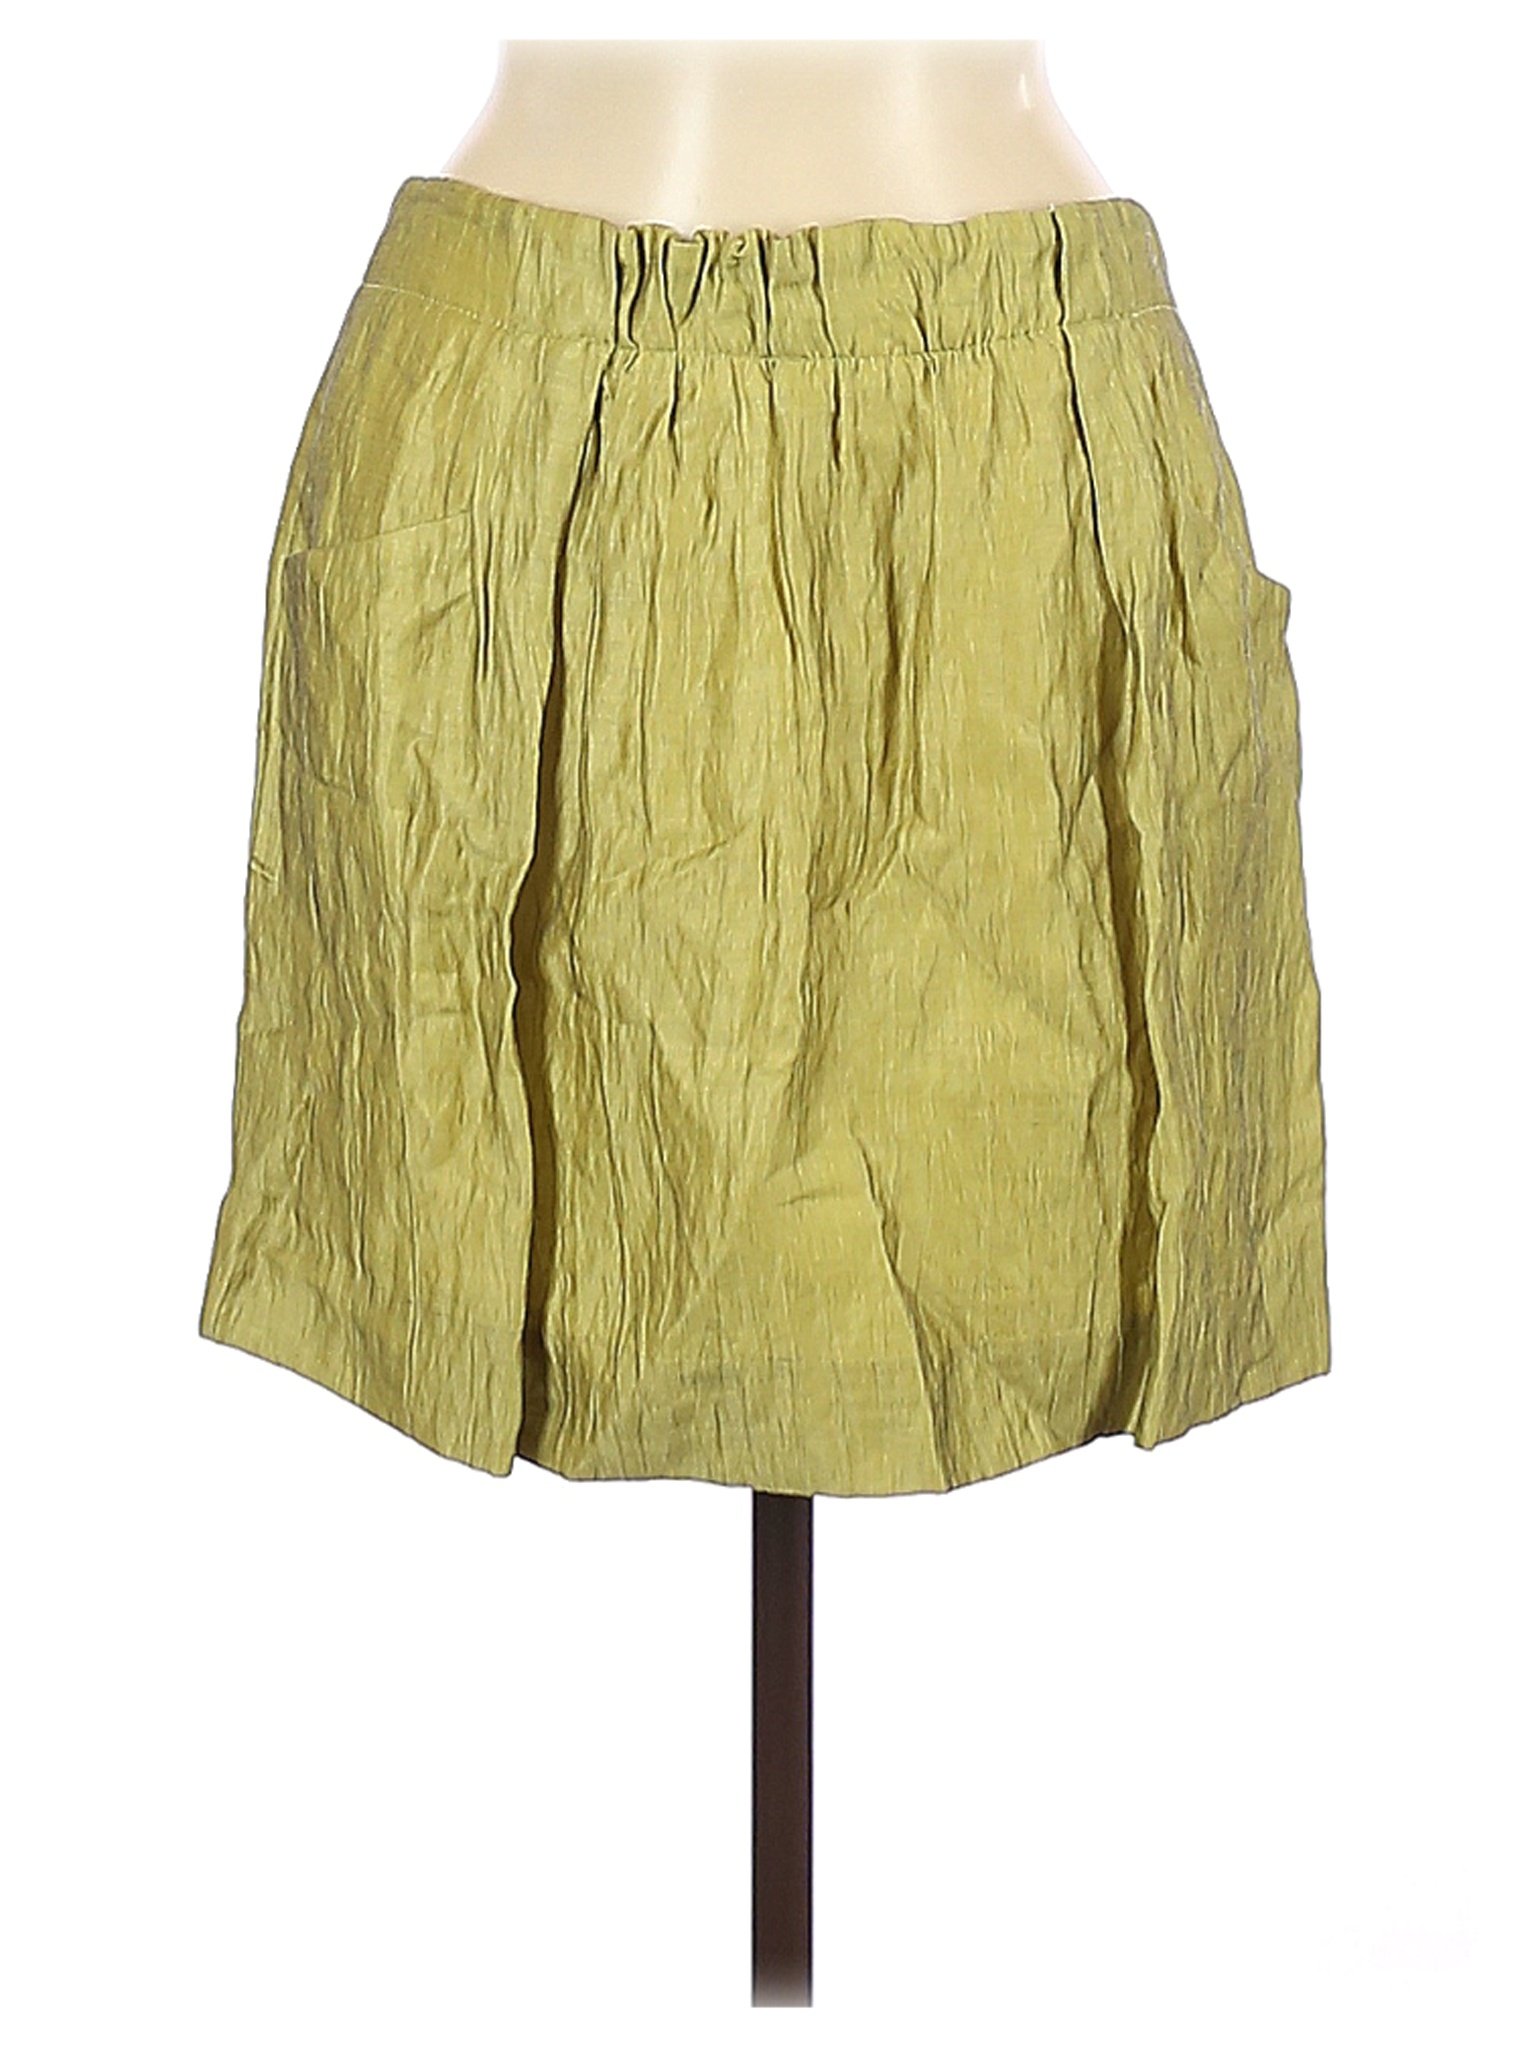 J.Crew Women Green Casual Skirt 6 | eBay